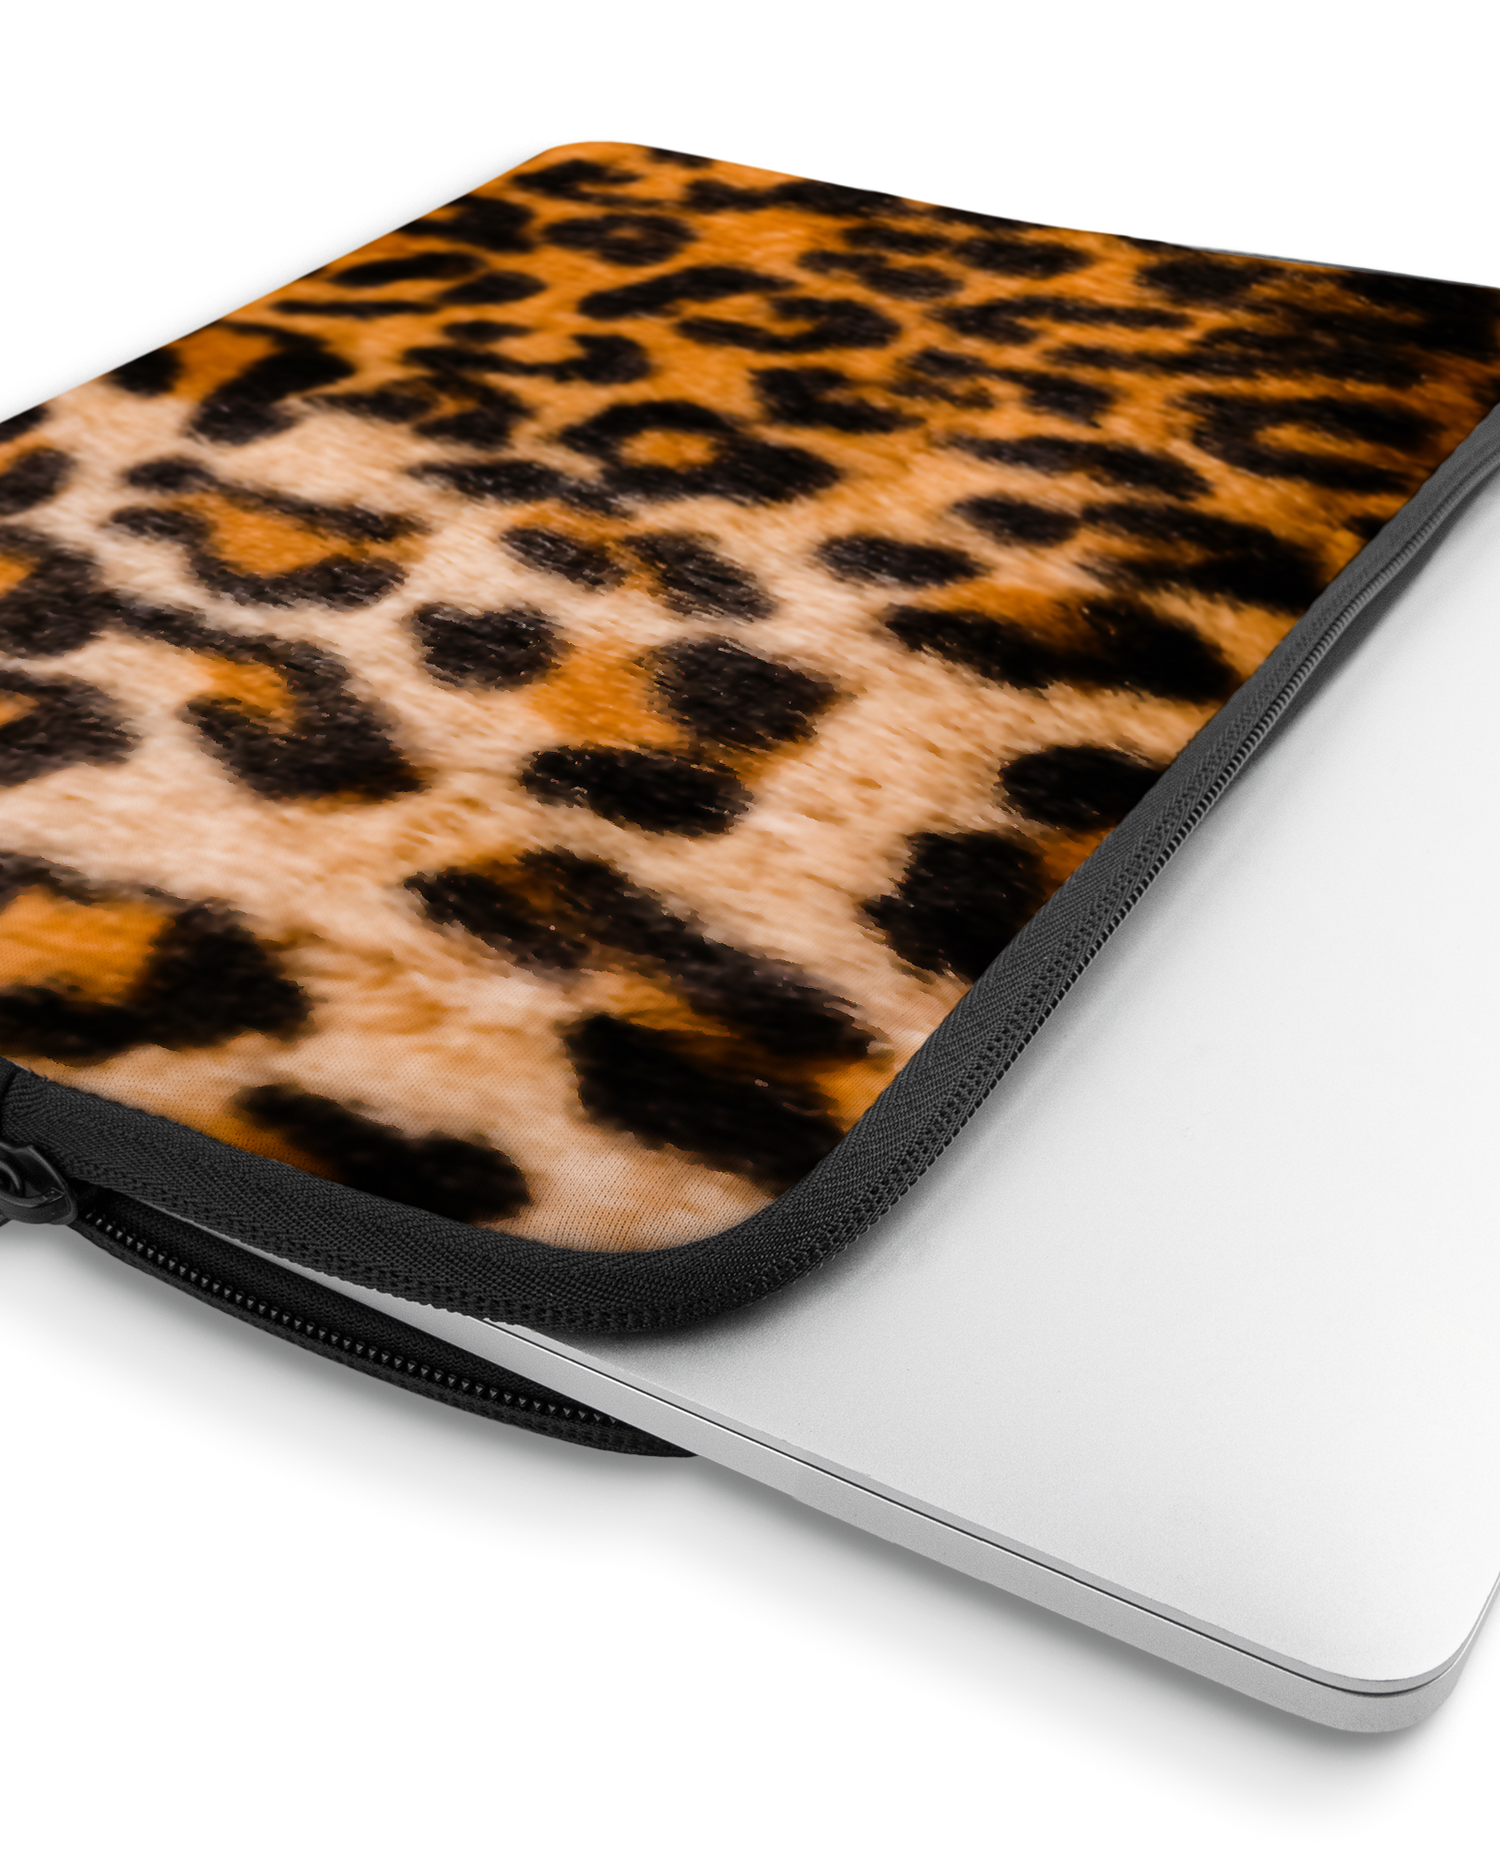 Leopard Pattern Laptop Case 13 inch with device inside